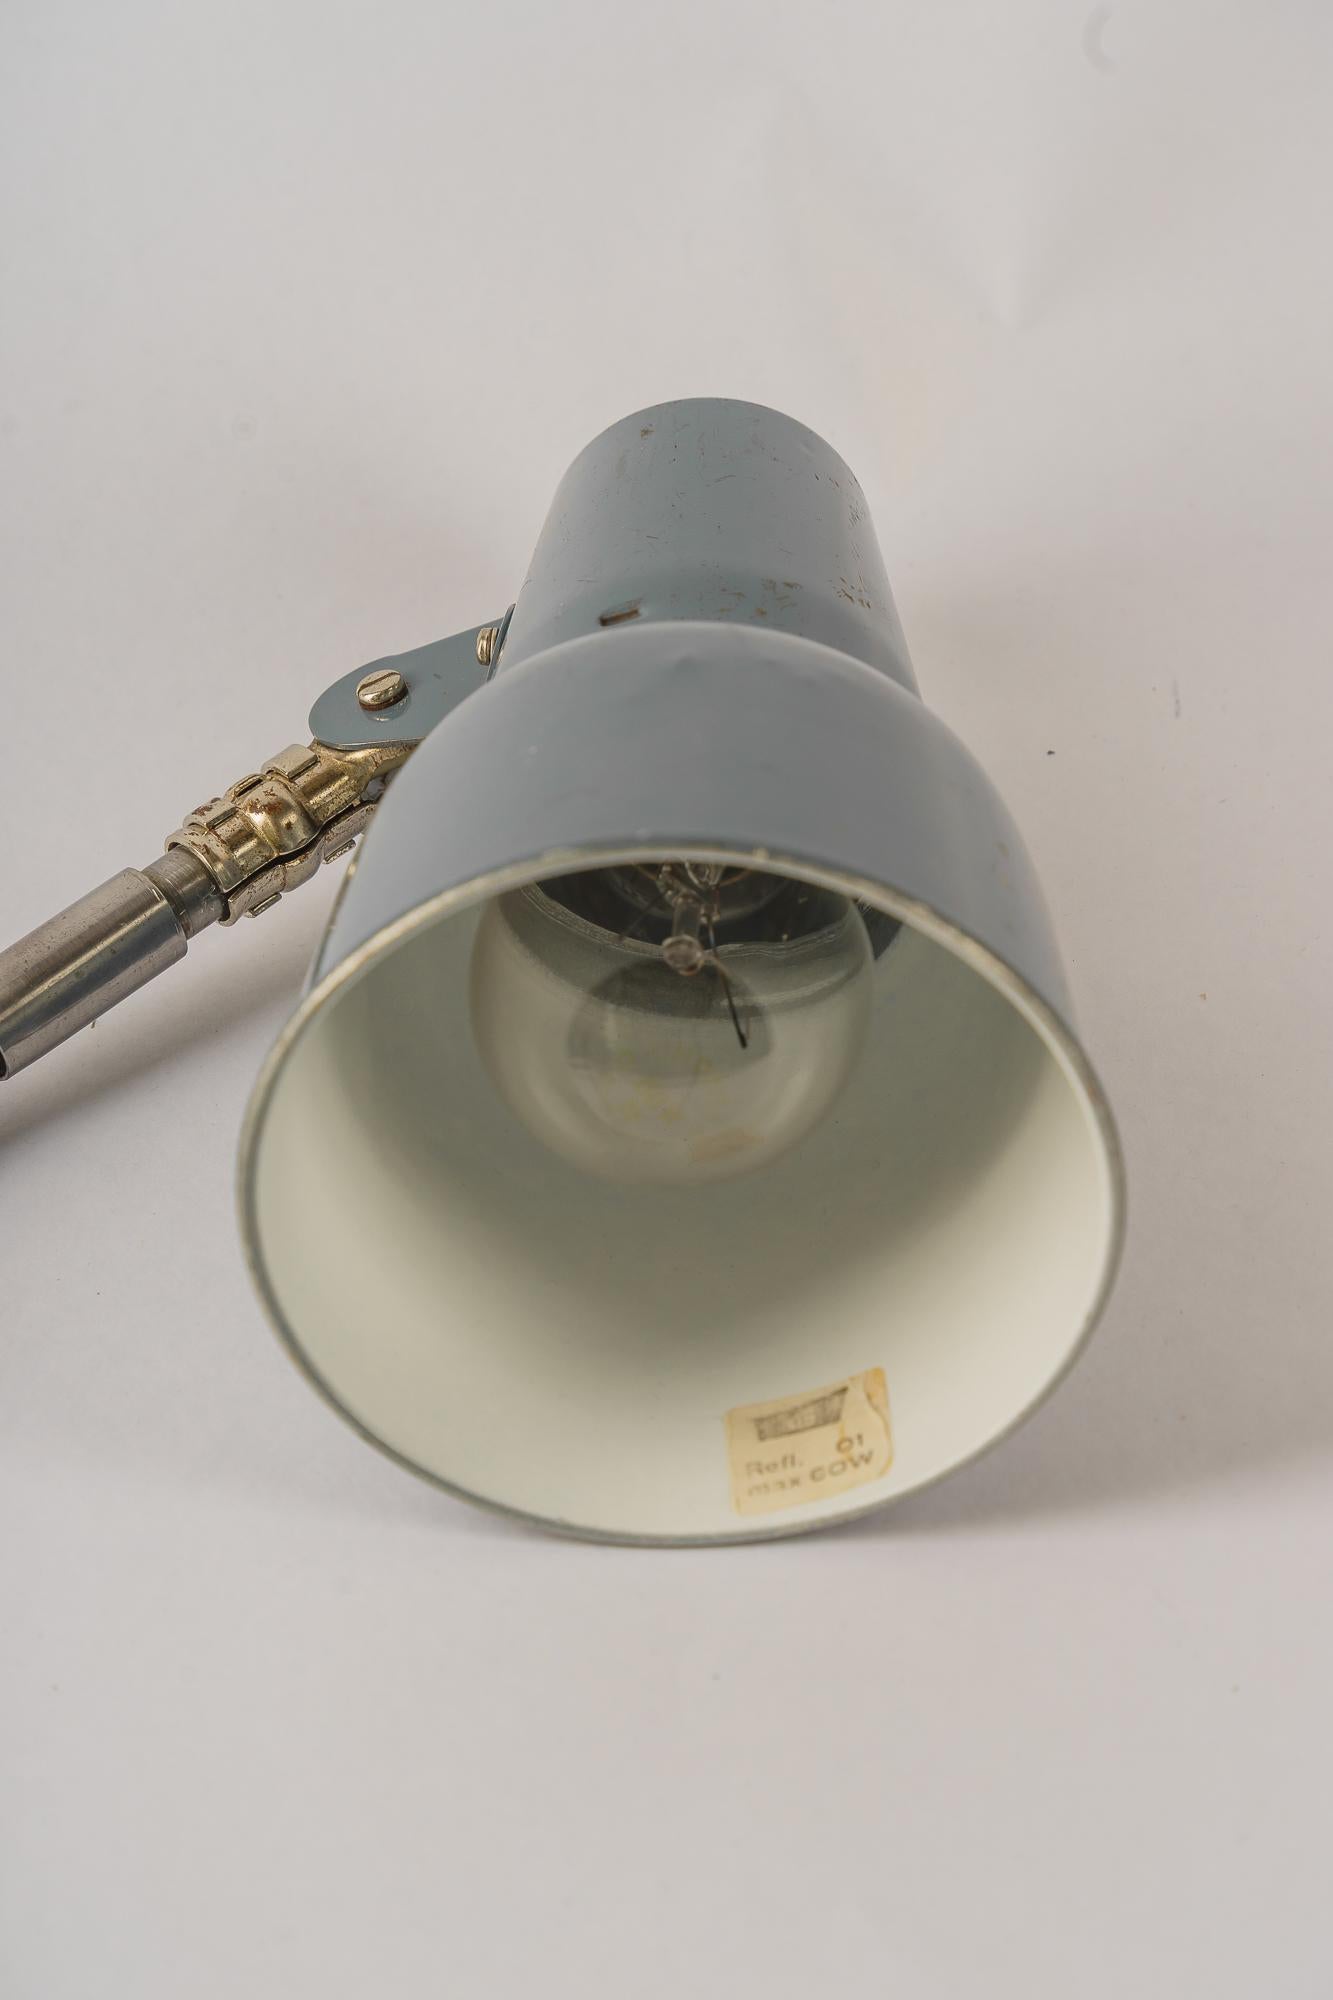 Magnetic Table Lamp circa 1950s
Original condition